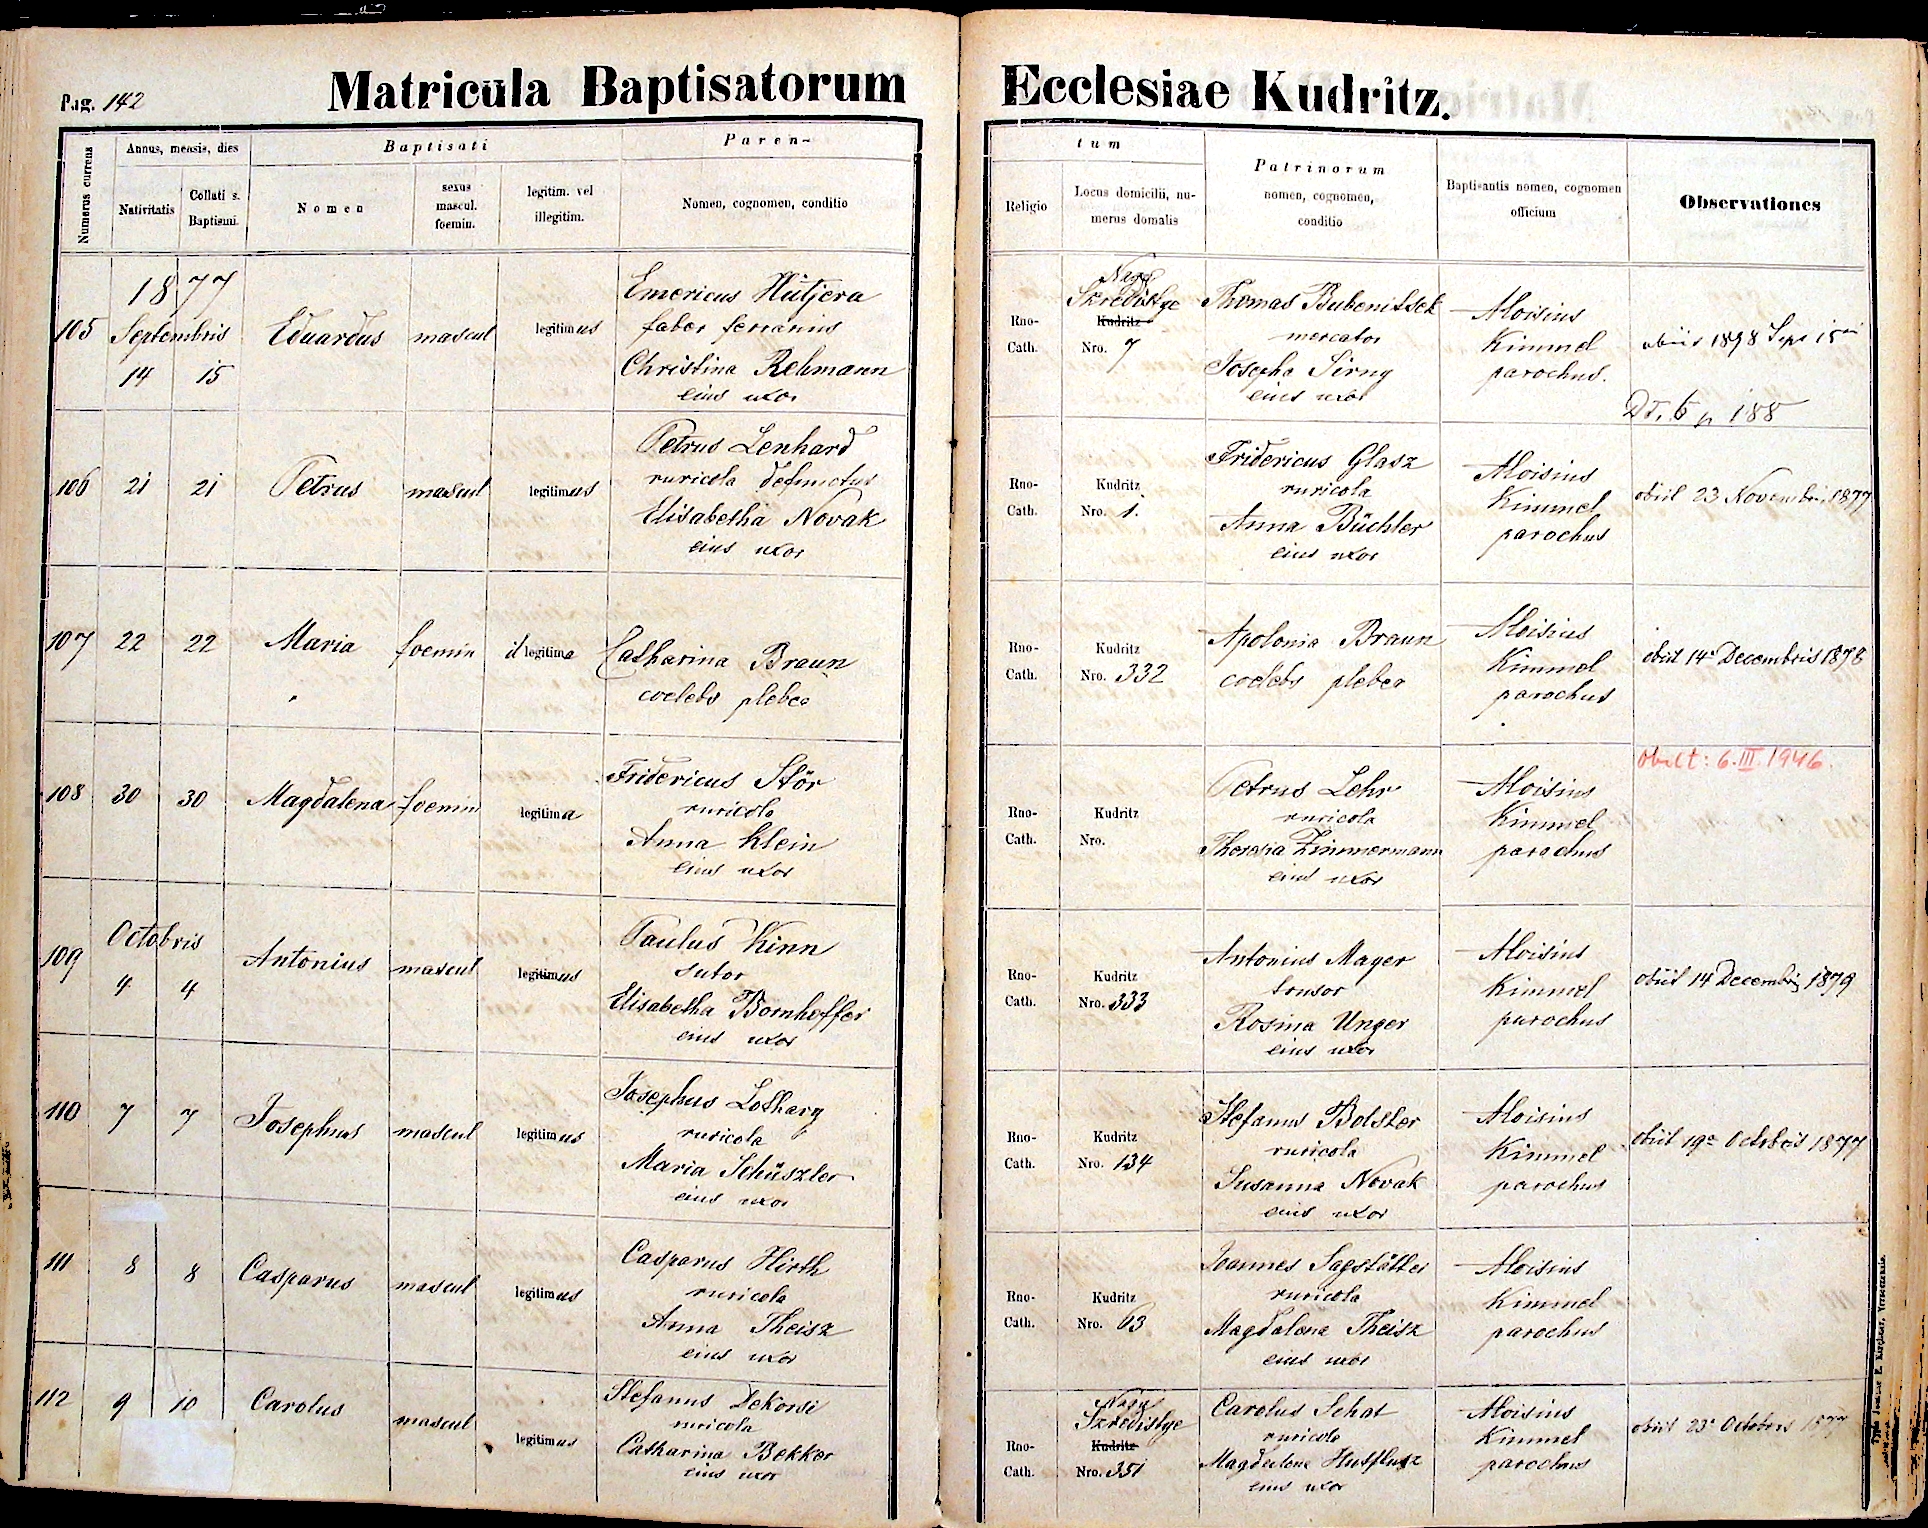 images/church_records/BIRTHS/1884-1899B/1893/142